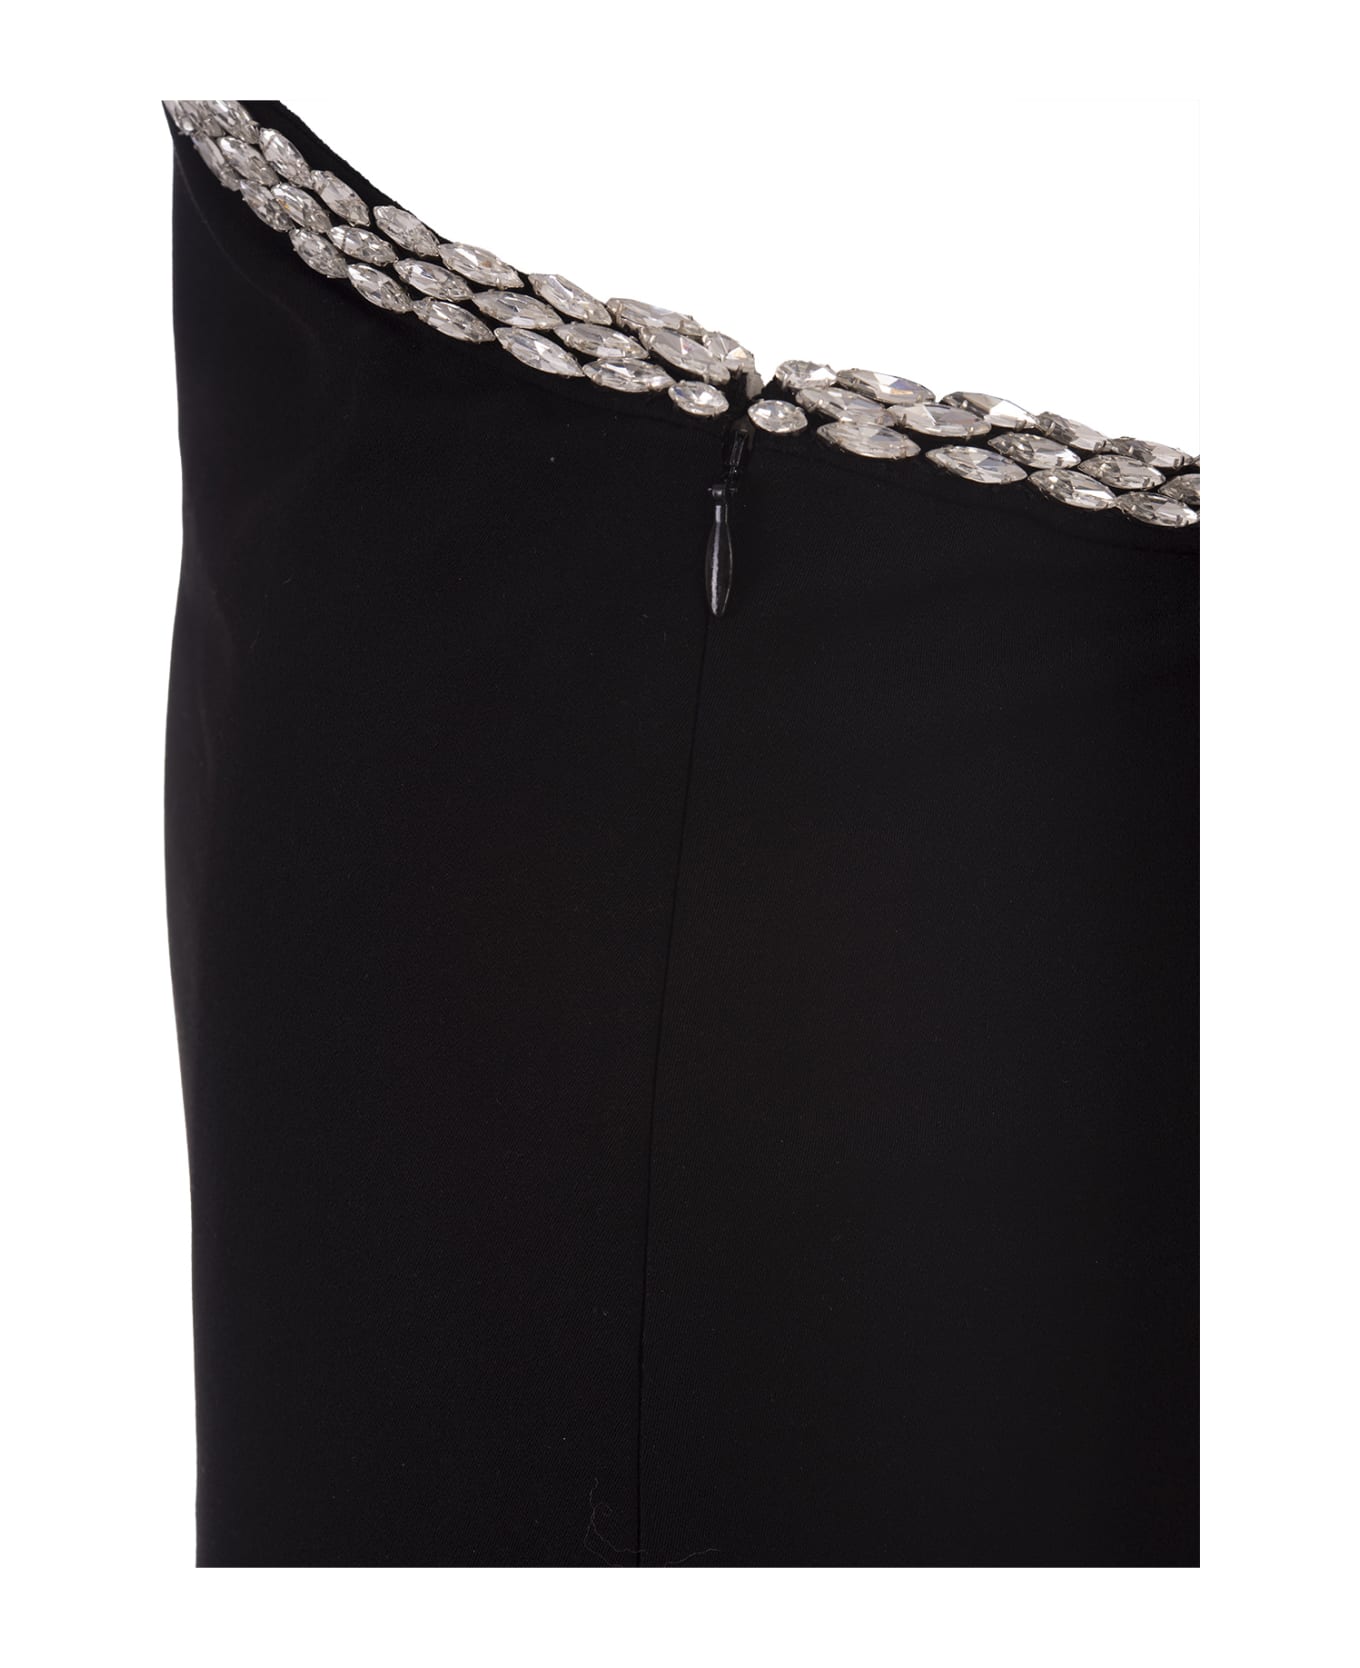 retrofete Sharlene Dress In Black And Silver - Black